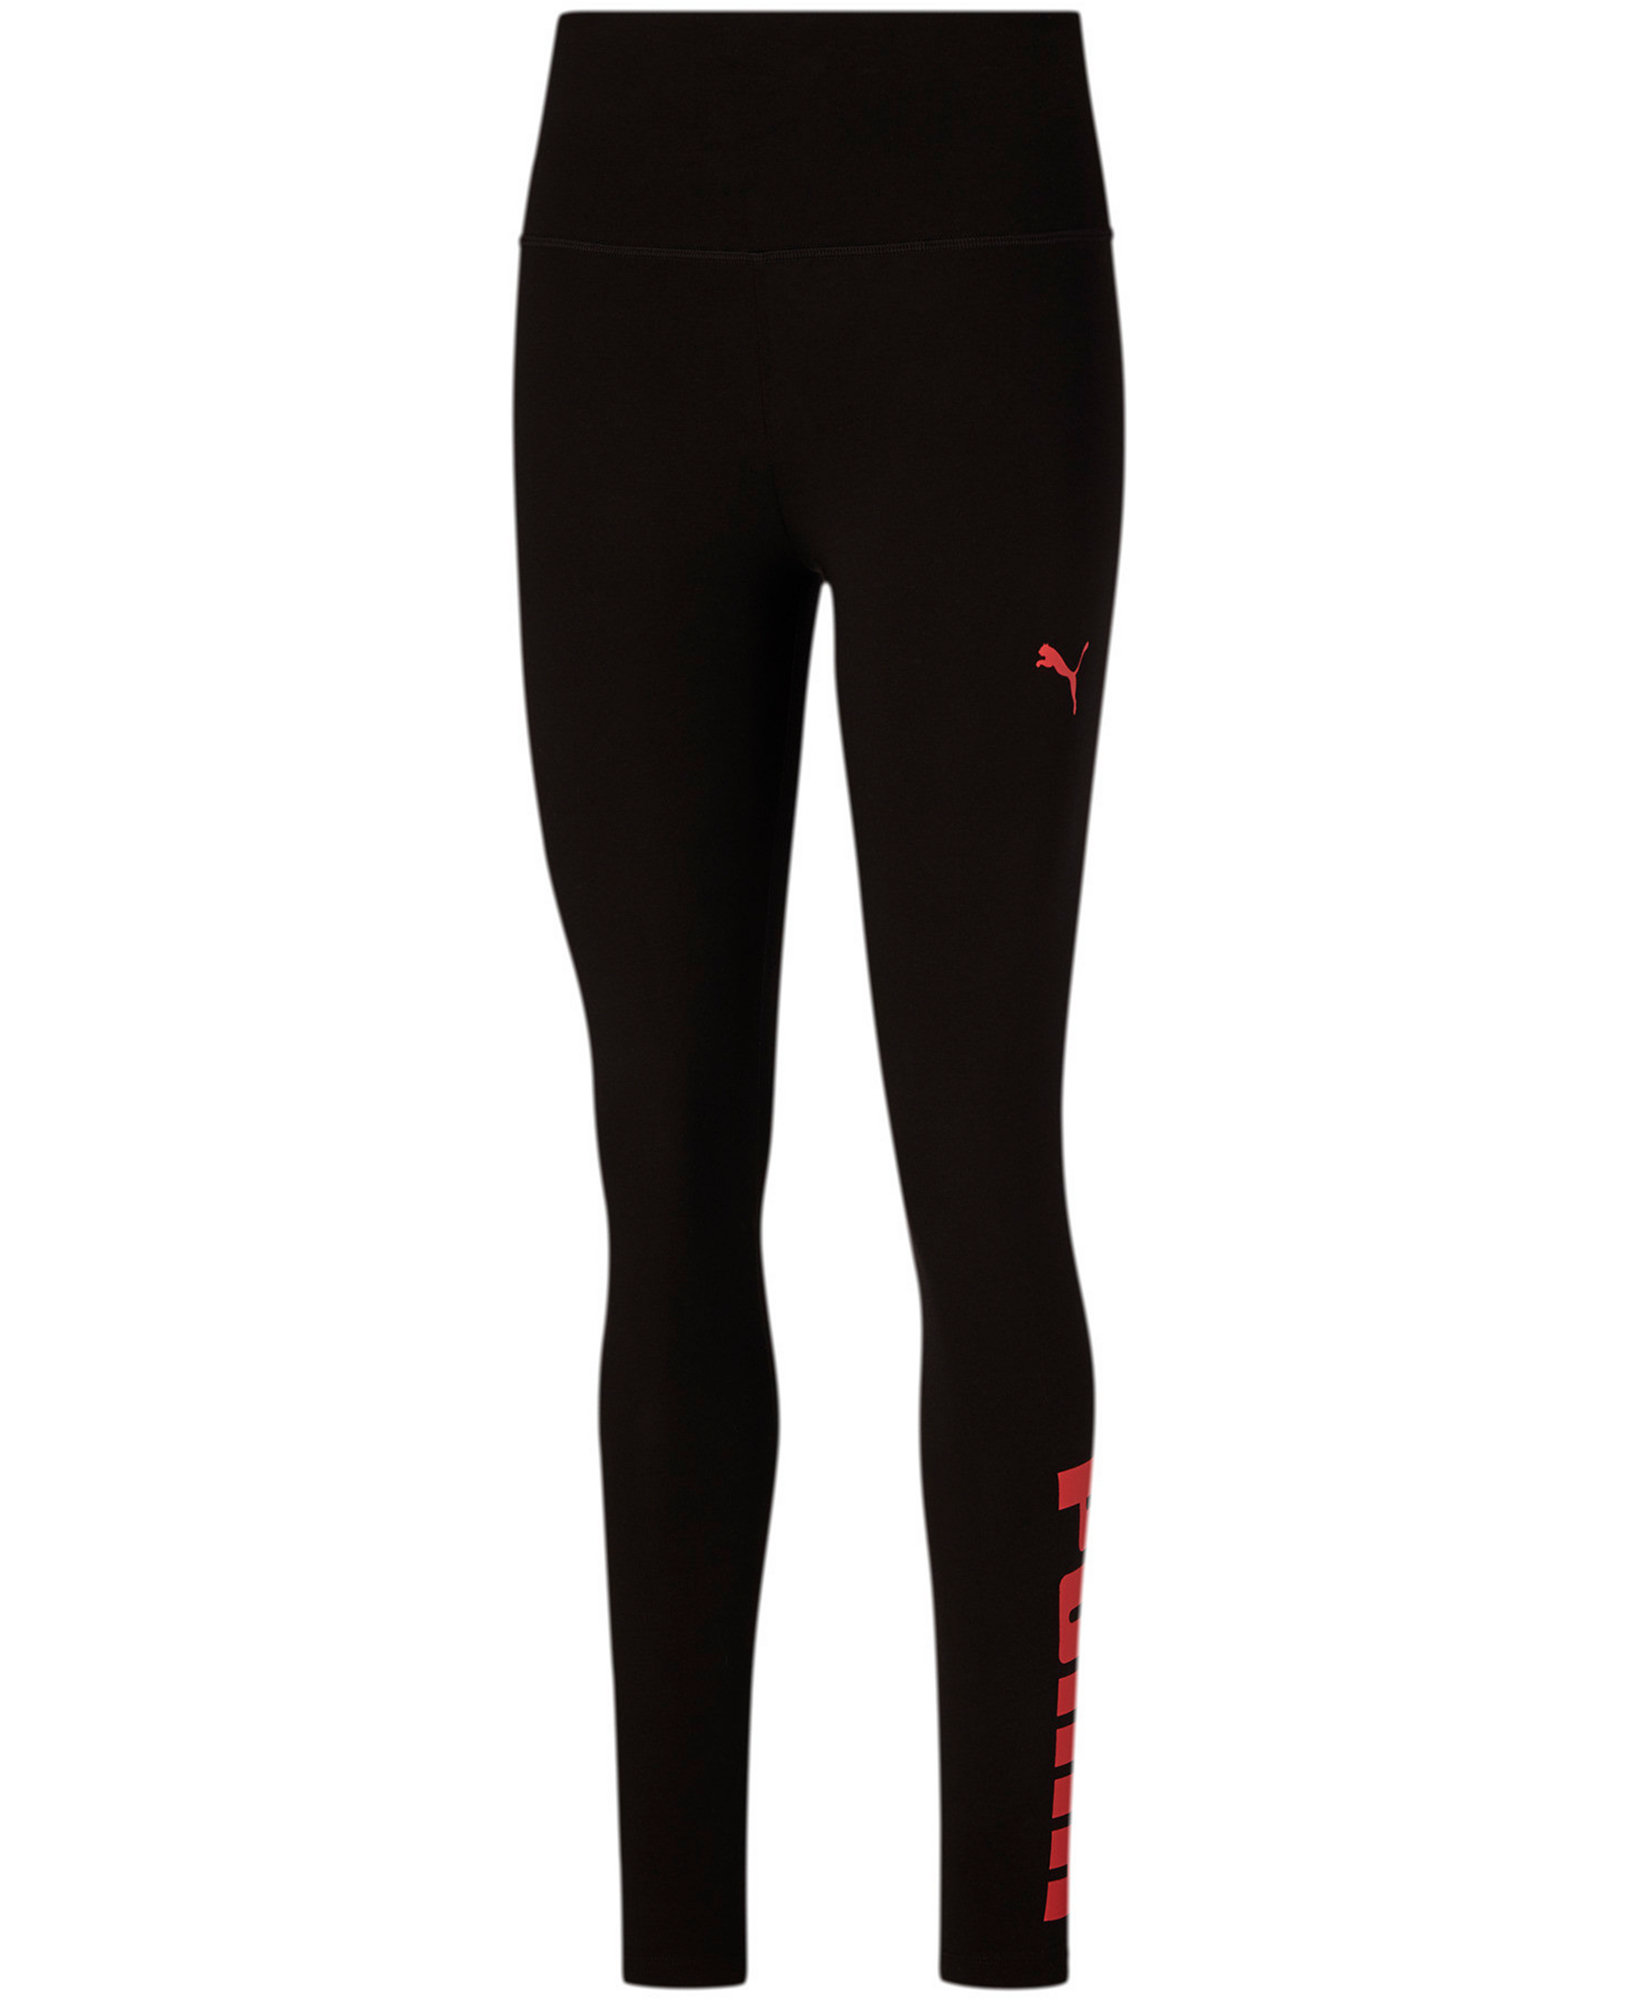 Puma Women's Graphic Full-Length Leggings (X-Small, Puma Noir/Paradise Rose)